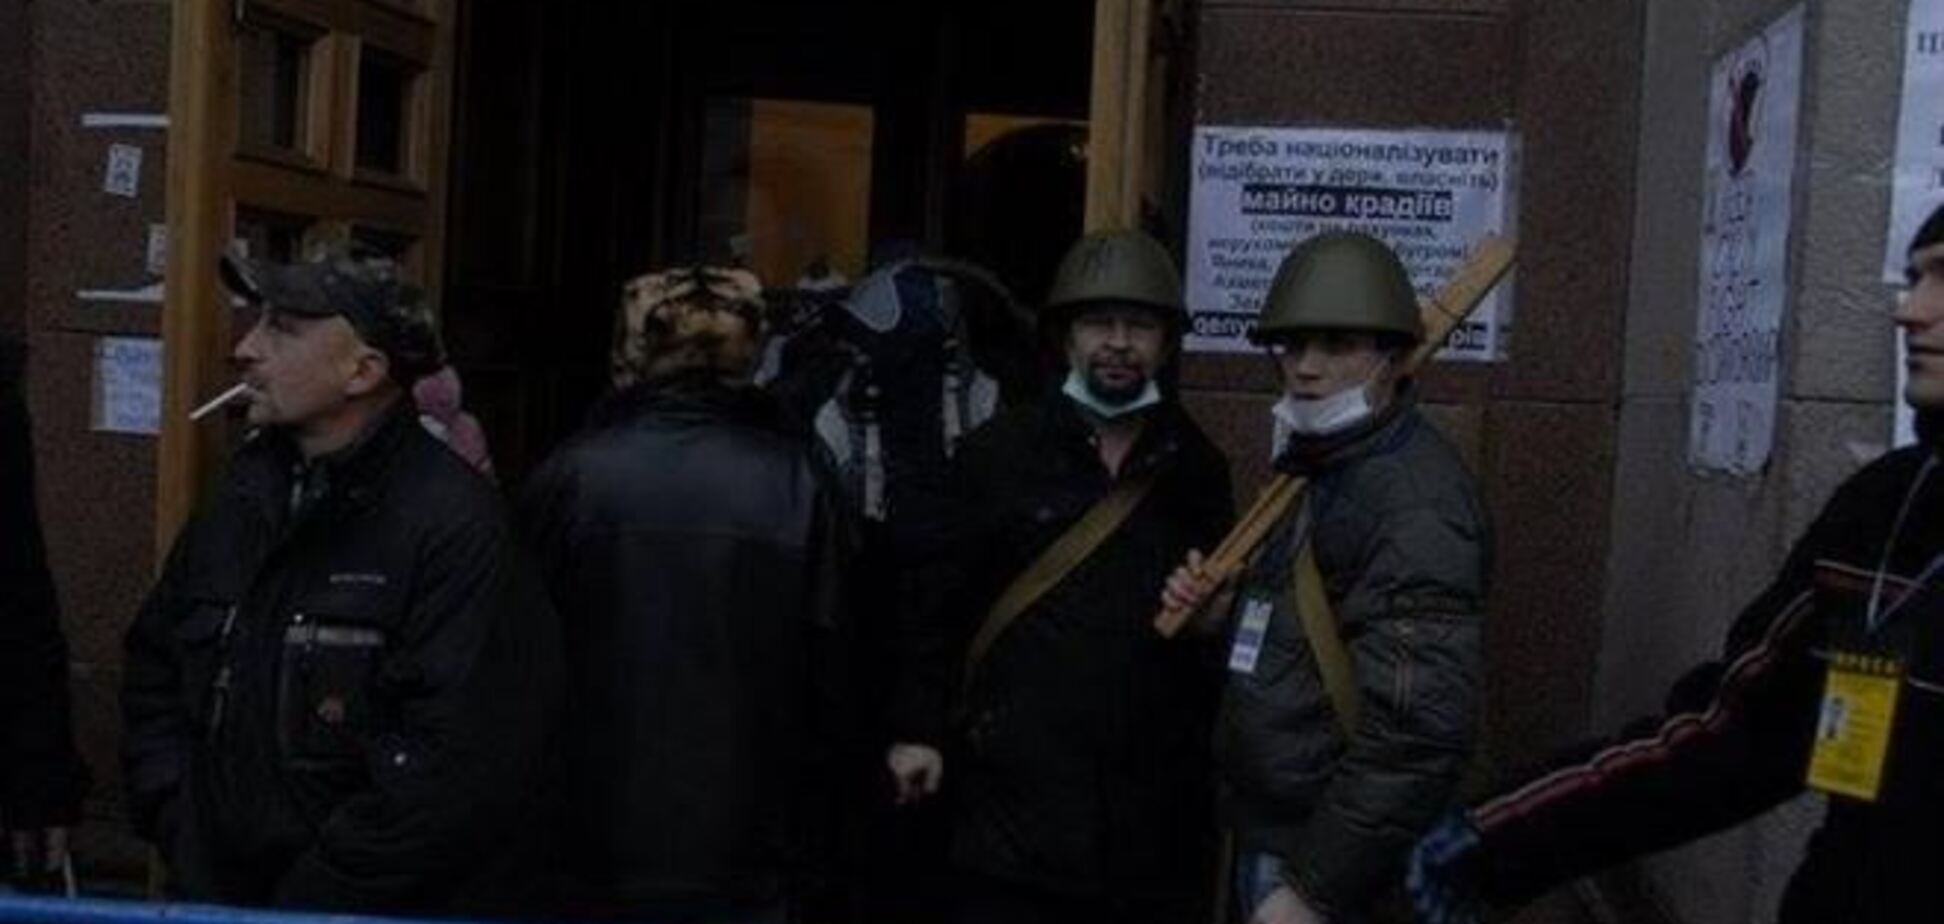 Евромайдан: лучшие фото дня 